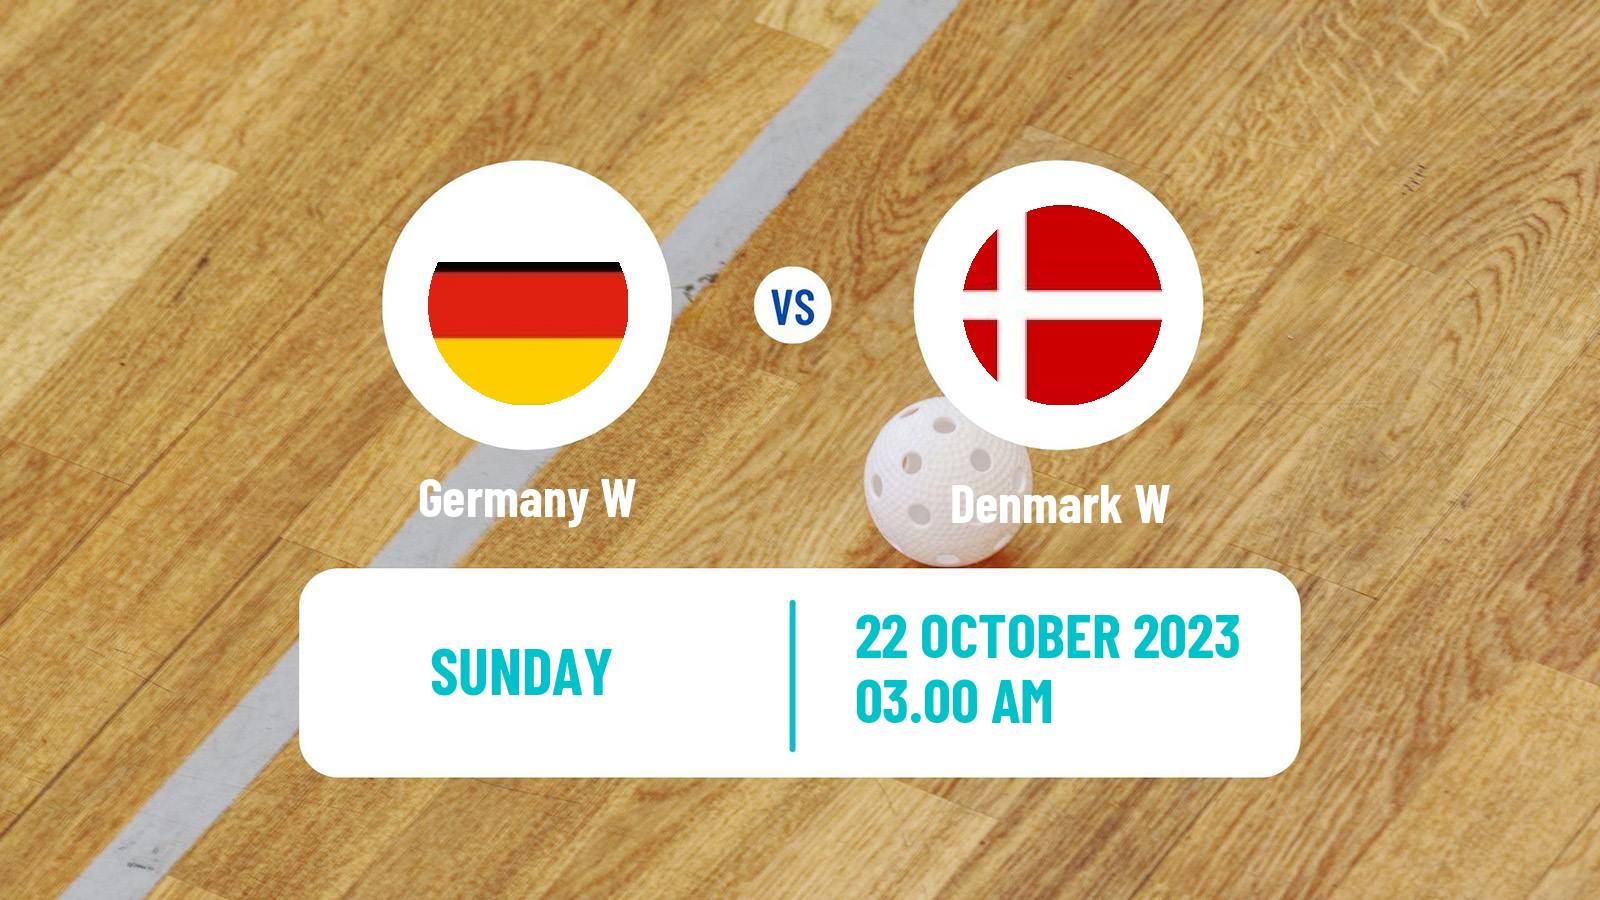 Floorball Friendly International Floorball Women Germany W - Denmark W